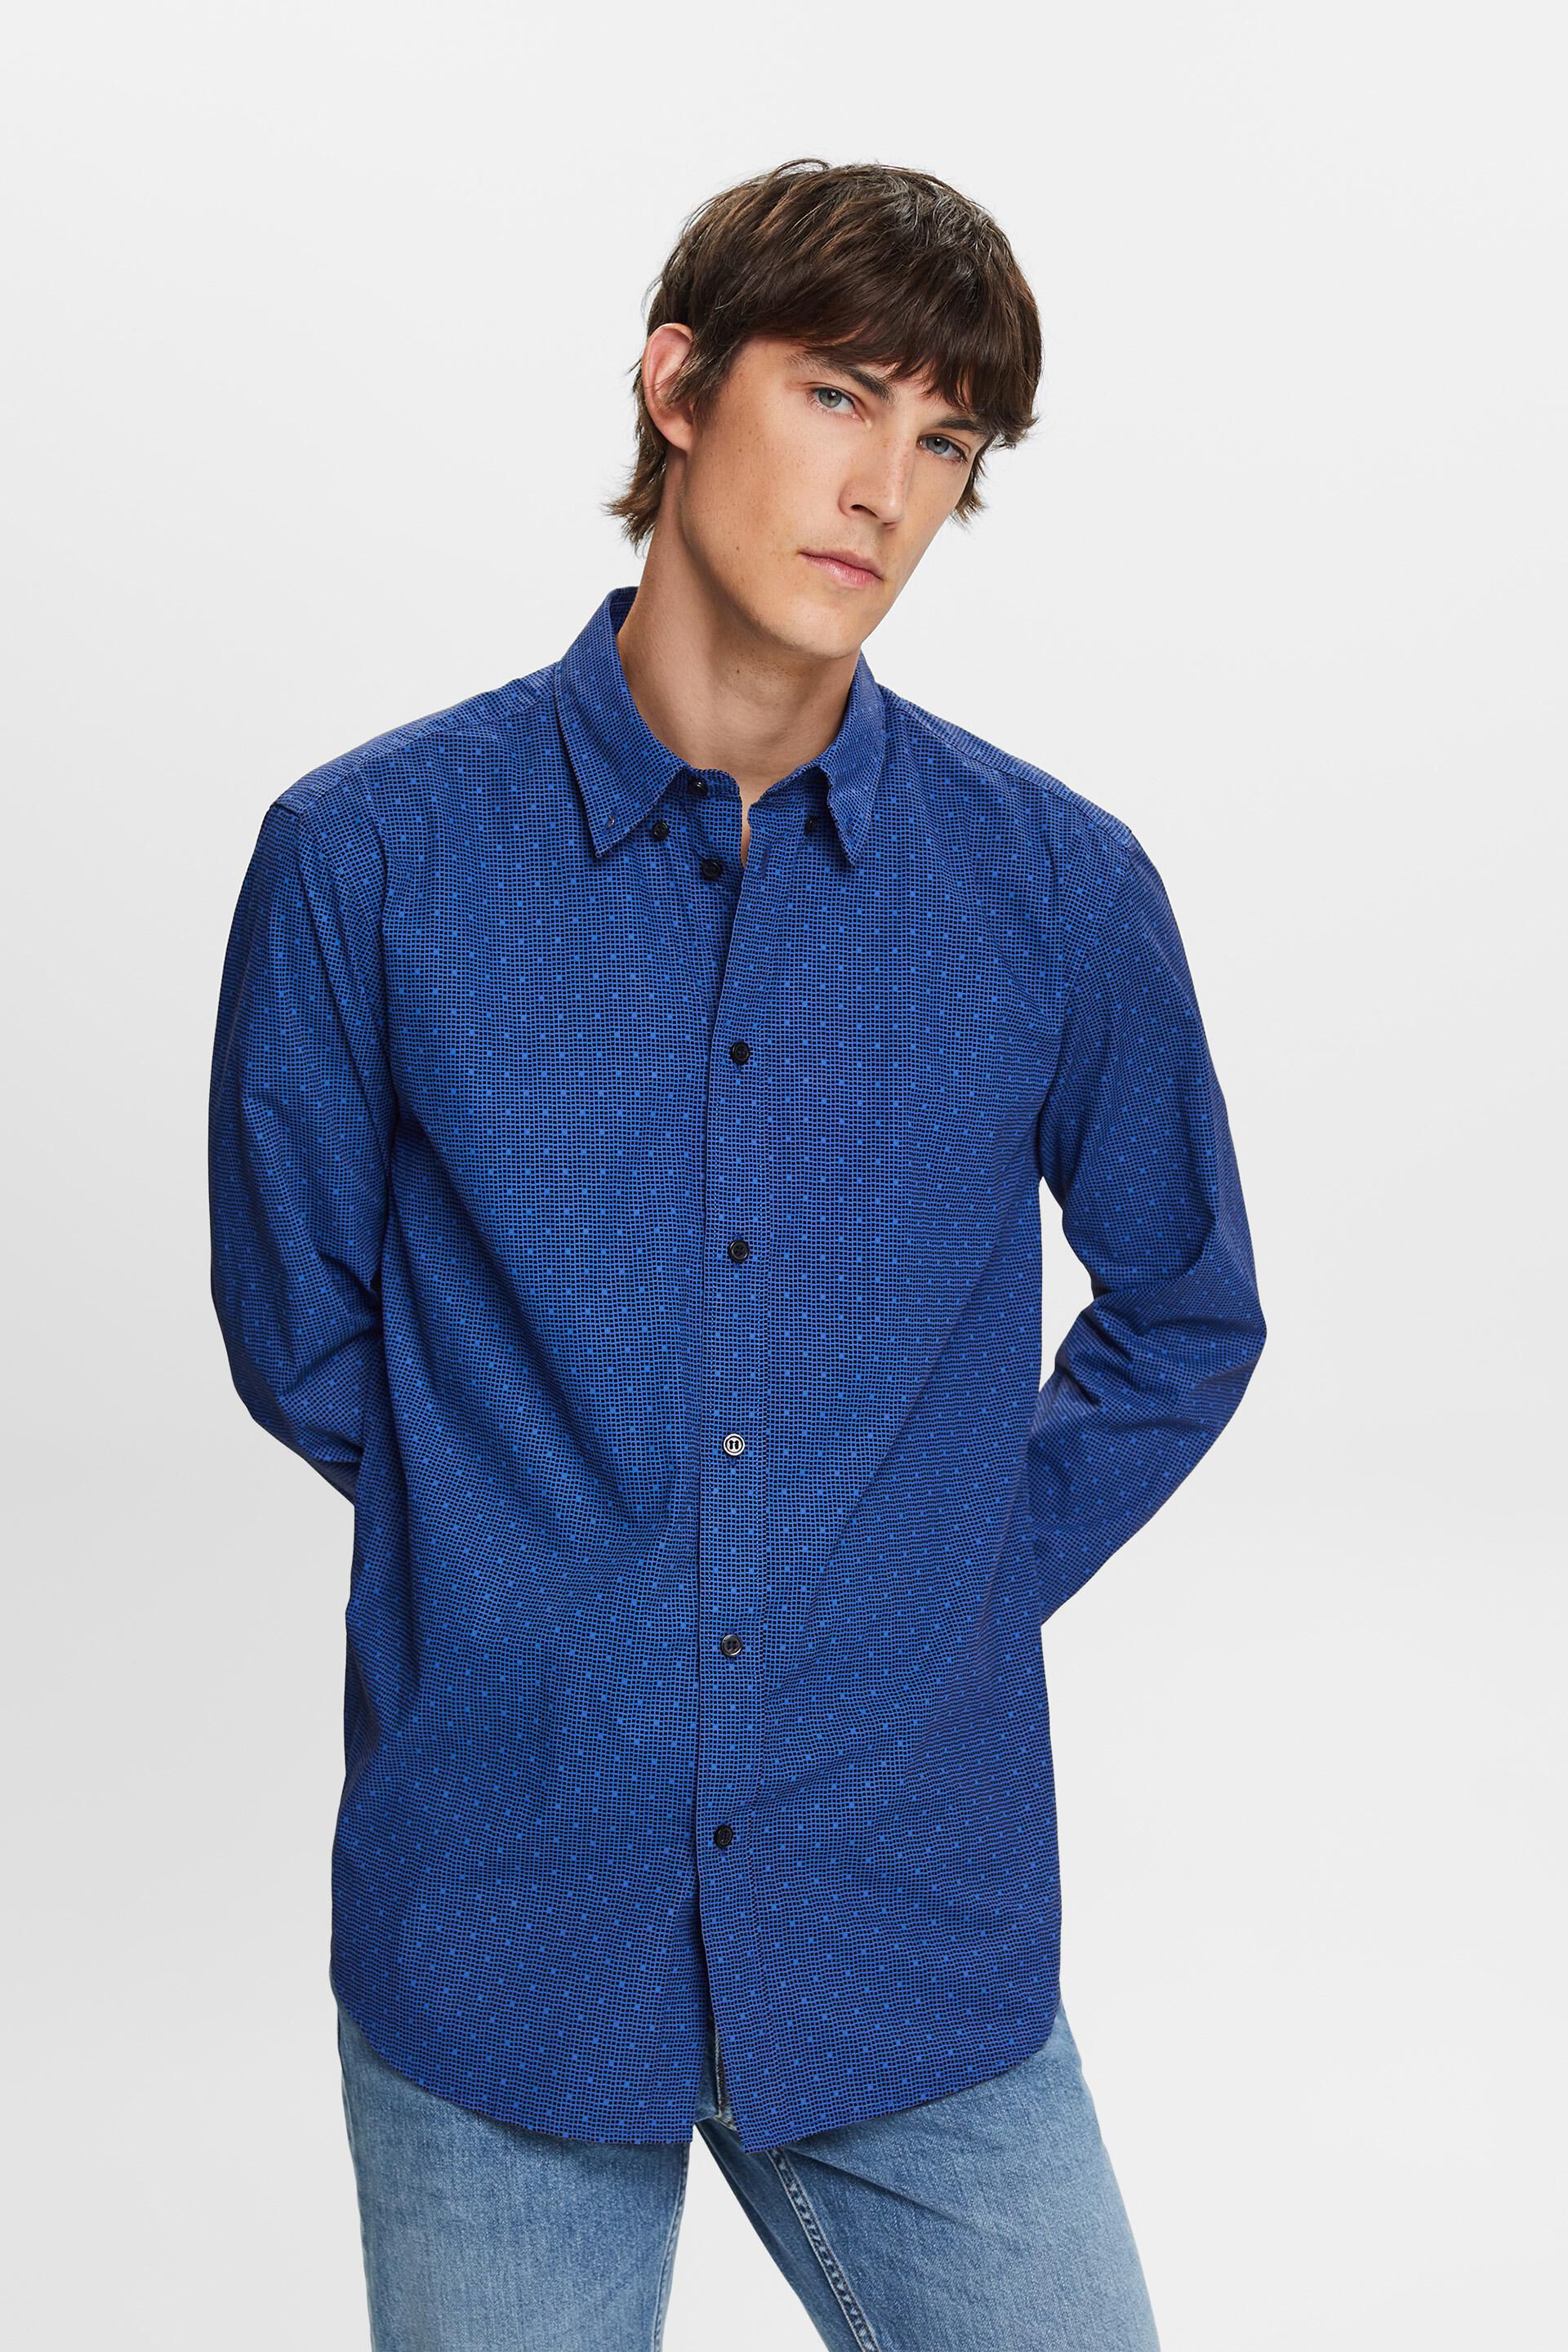 Esprit Bikini Patterned button-down shirt, 100% cotton